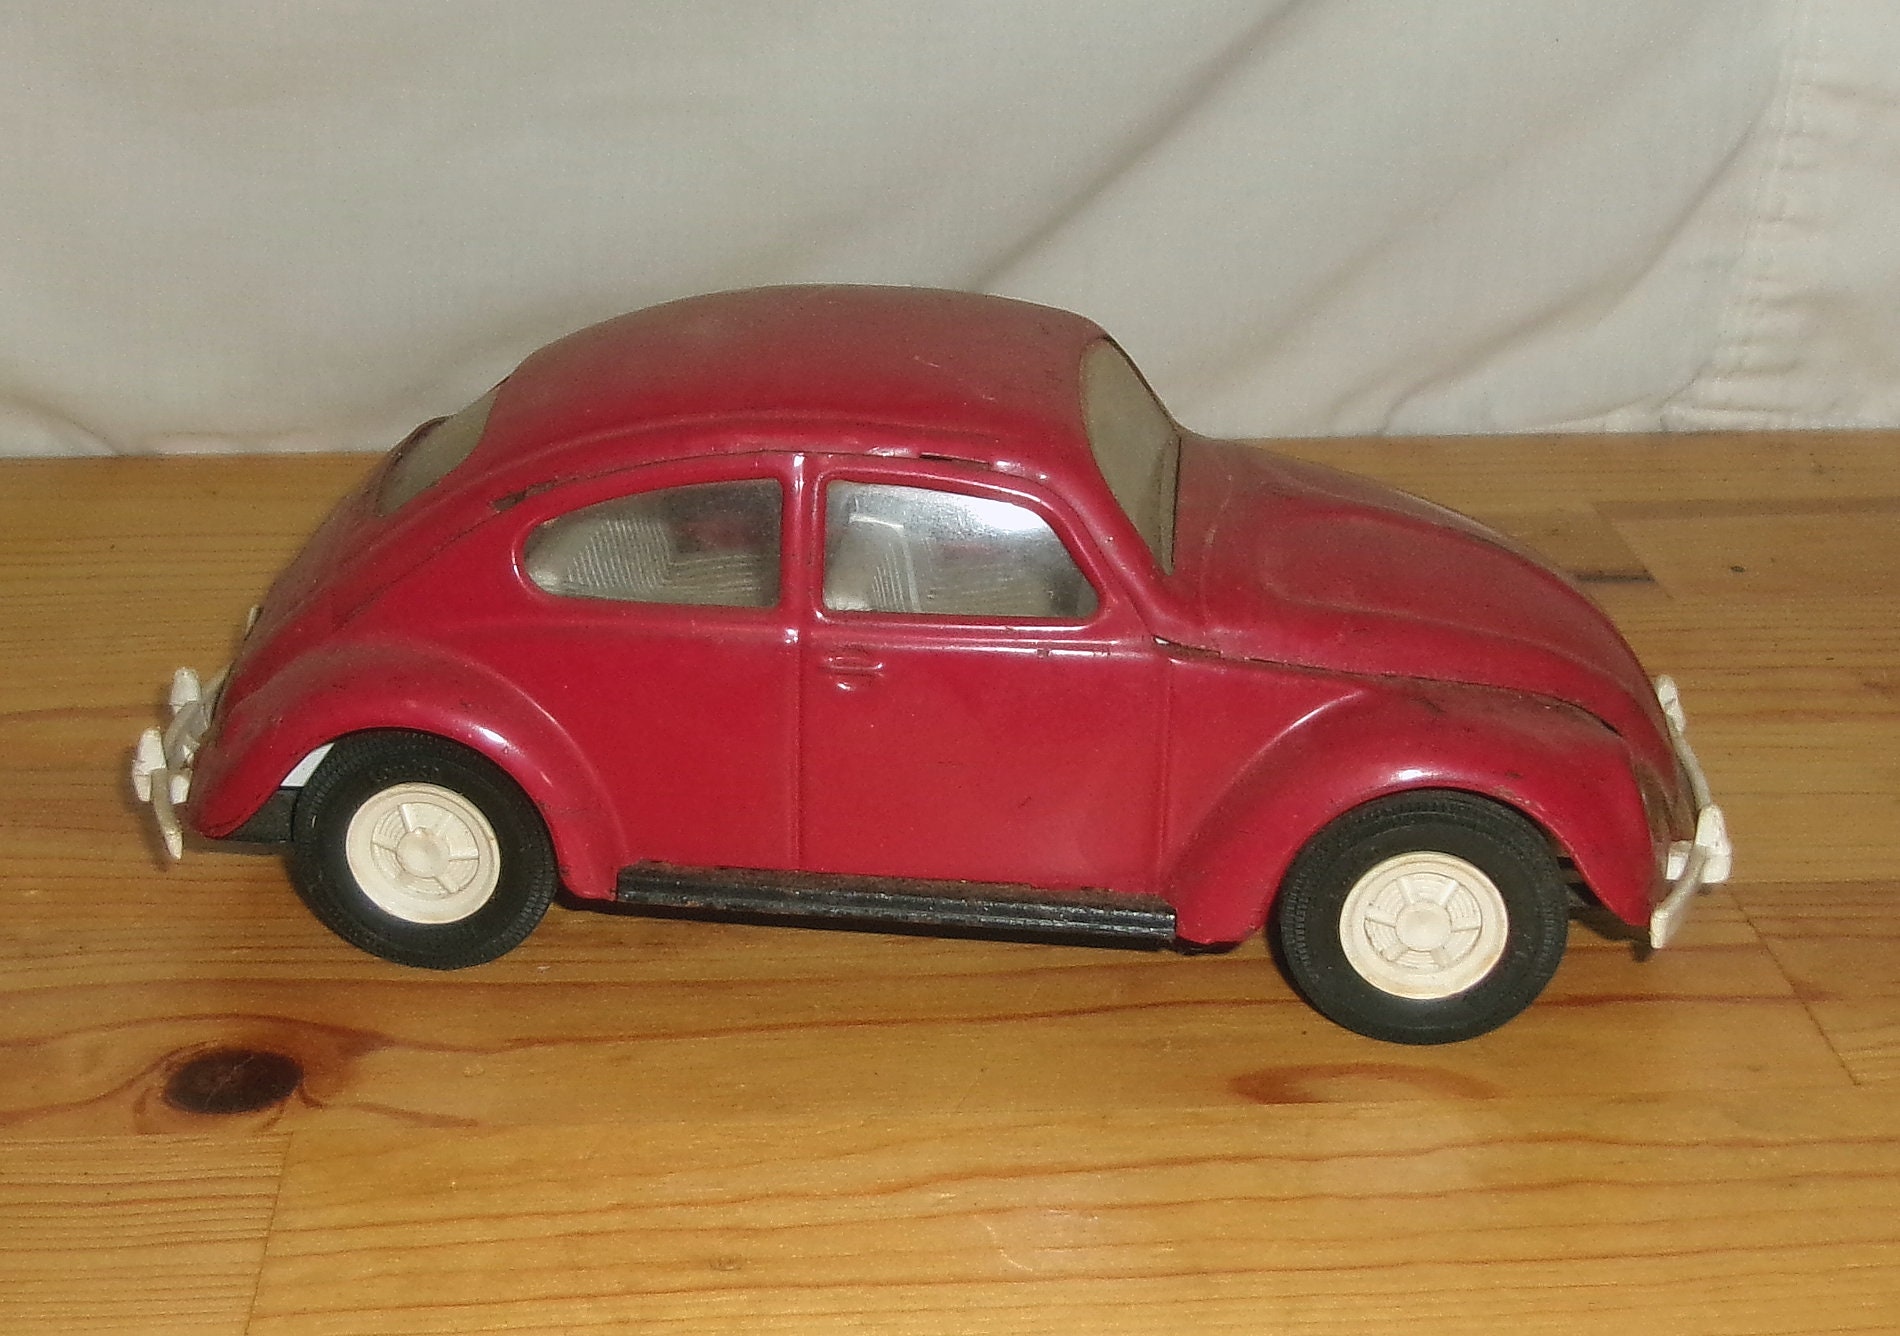 VTG 1960s Groovy Love Bug VW Volkswagen Beetle Metal Tin Toy Car Aoshin  Japan